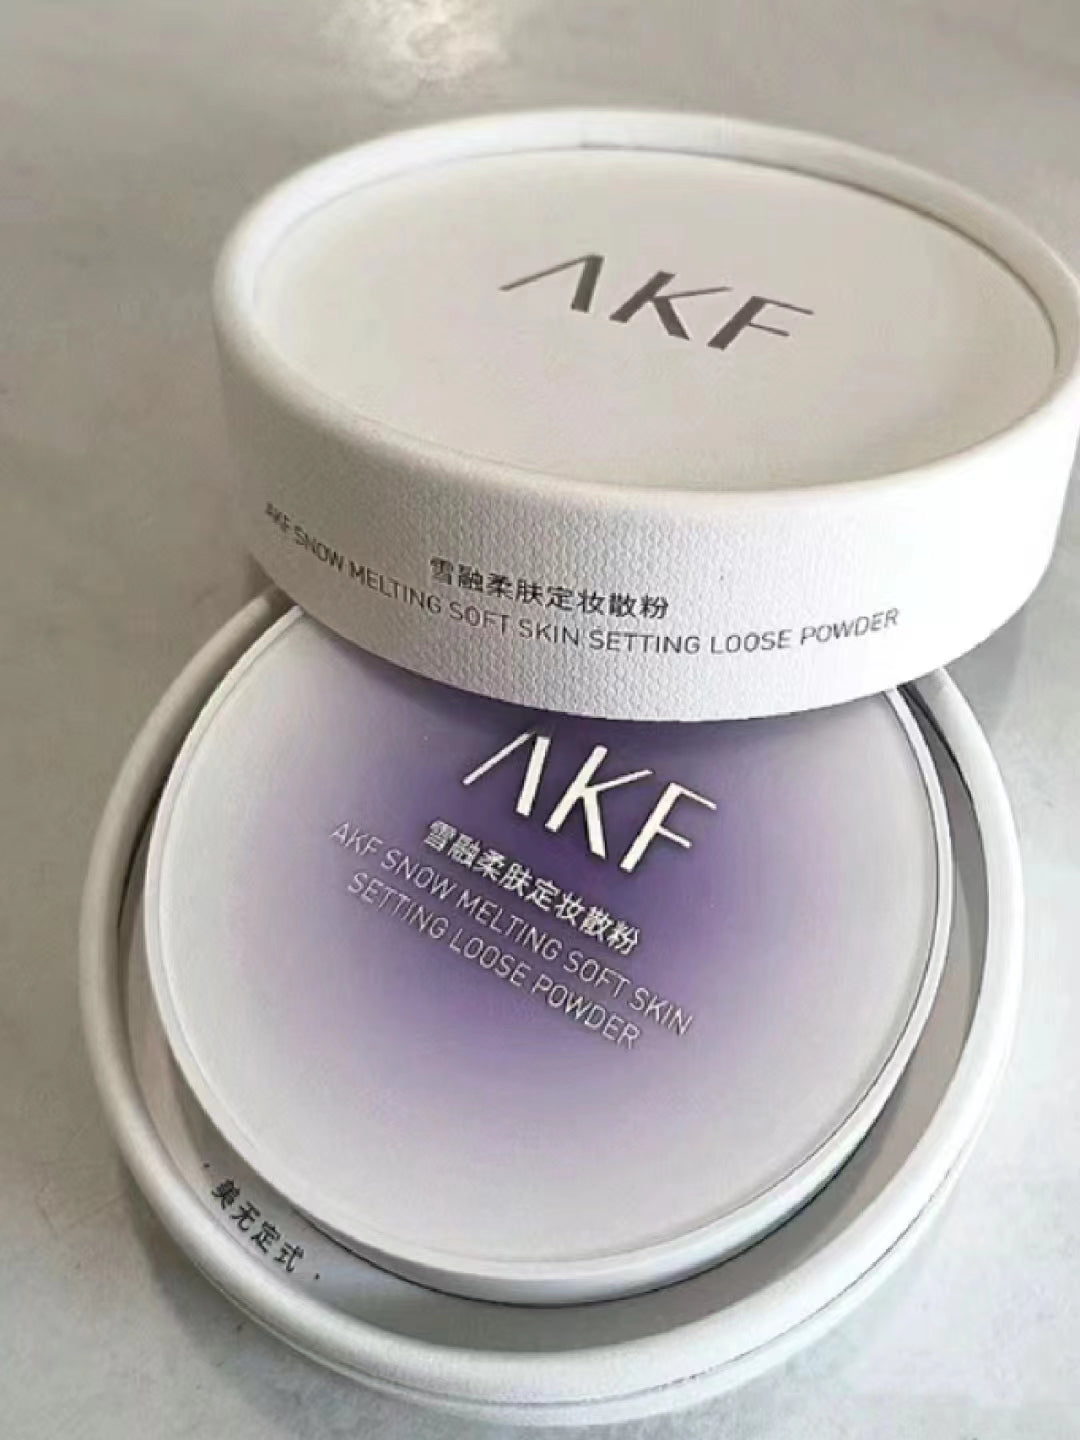 AKF New Snow Melt Oil Control Makeup Setting Powder 10g AKF新款雪融控油持妆定妆散粉